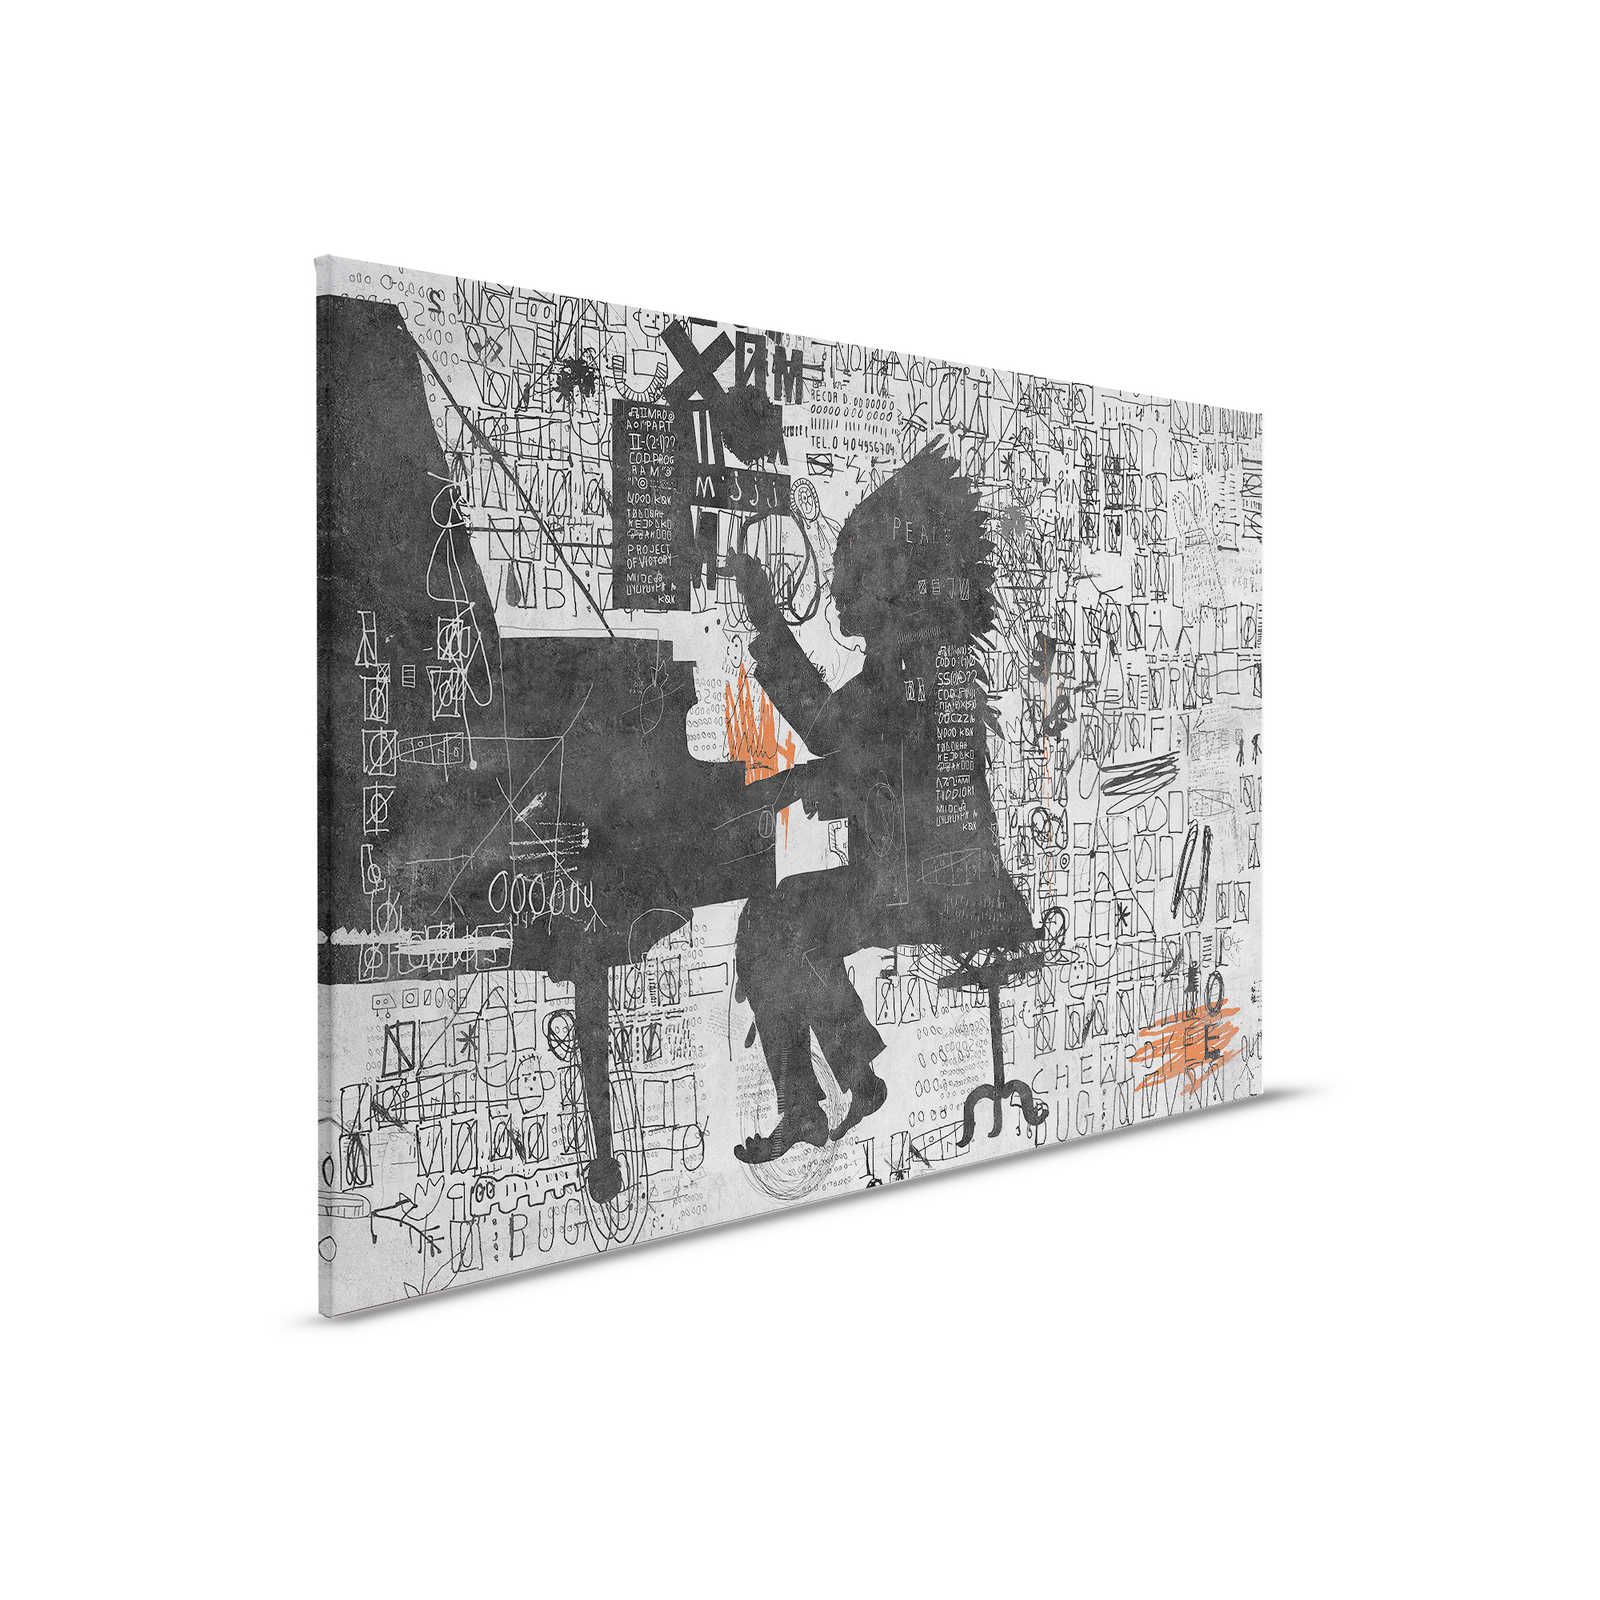 Piano Bar 1 - Lienzo Street Art Diseño Scribbel Negro y Gris - 0,90 m x 0,60 m
